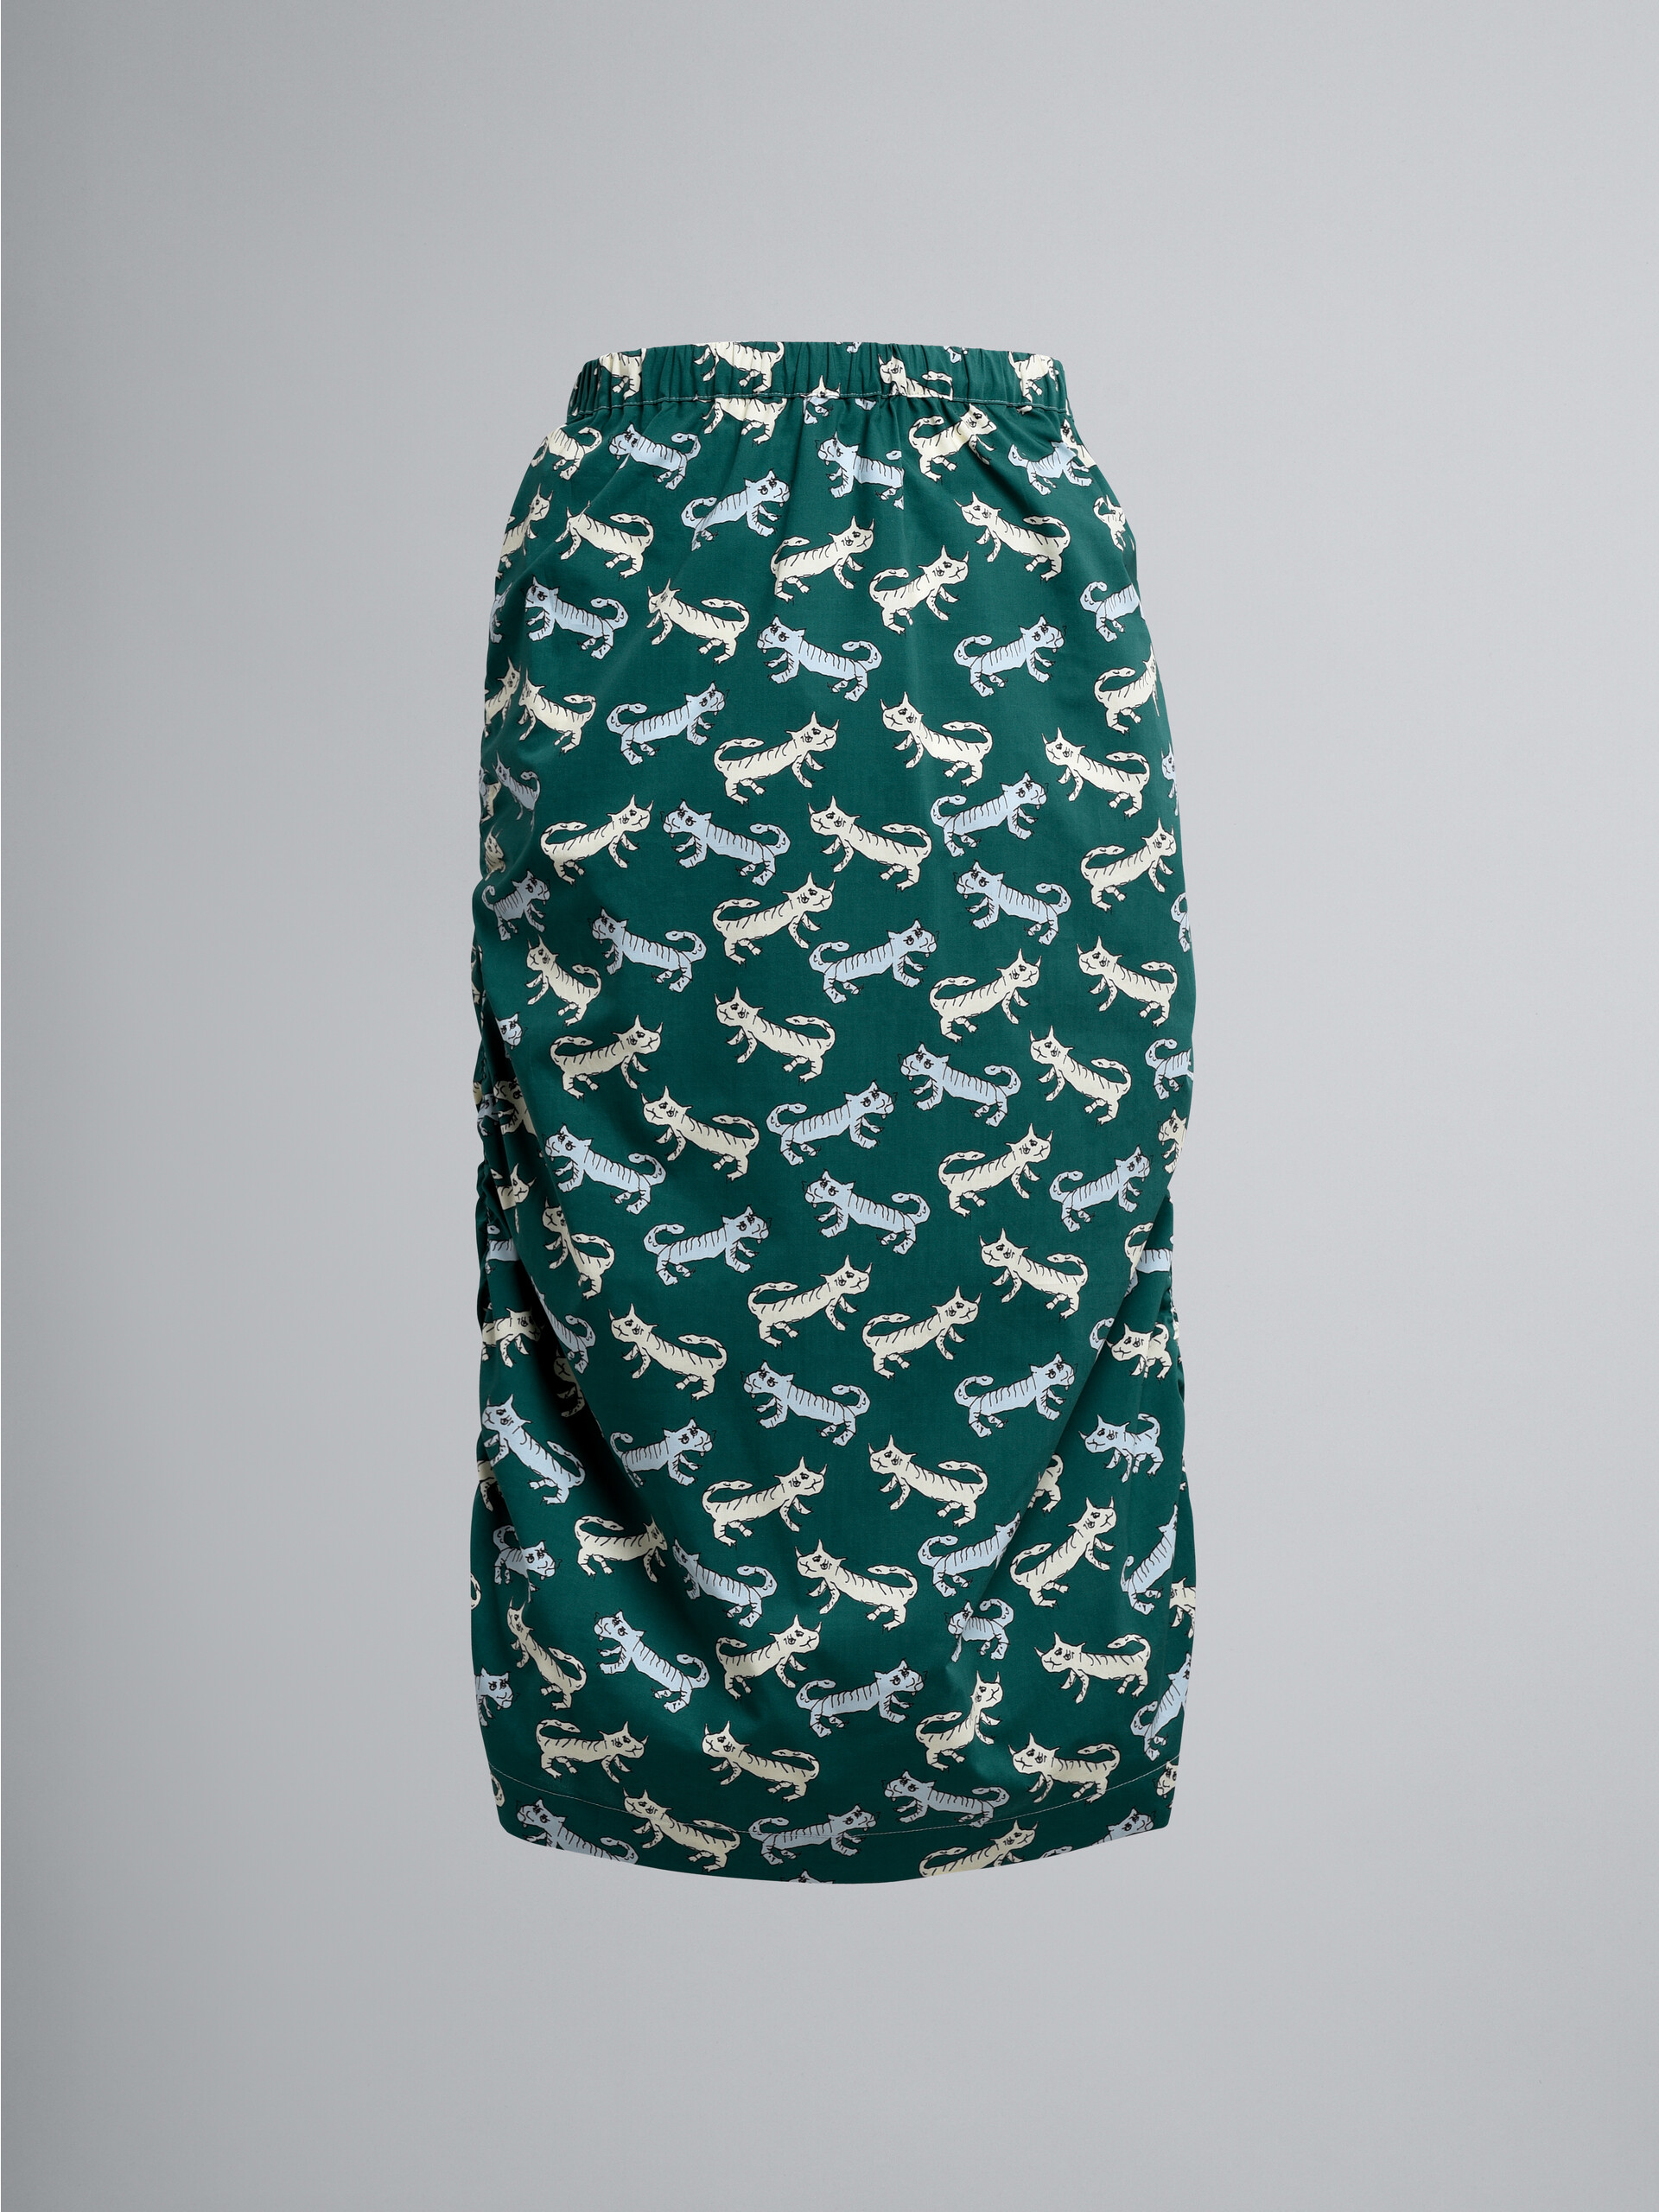 Naif Tiger print poplin pencil skirt - Skirts - Image 1